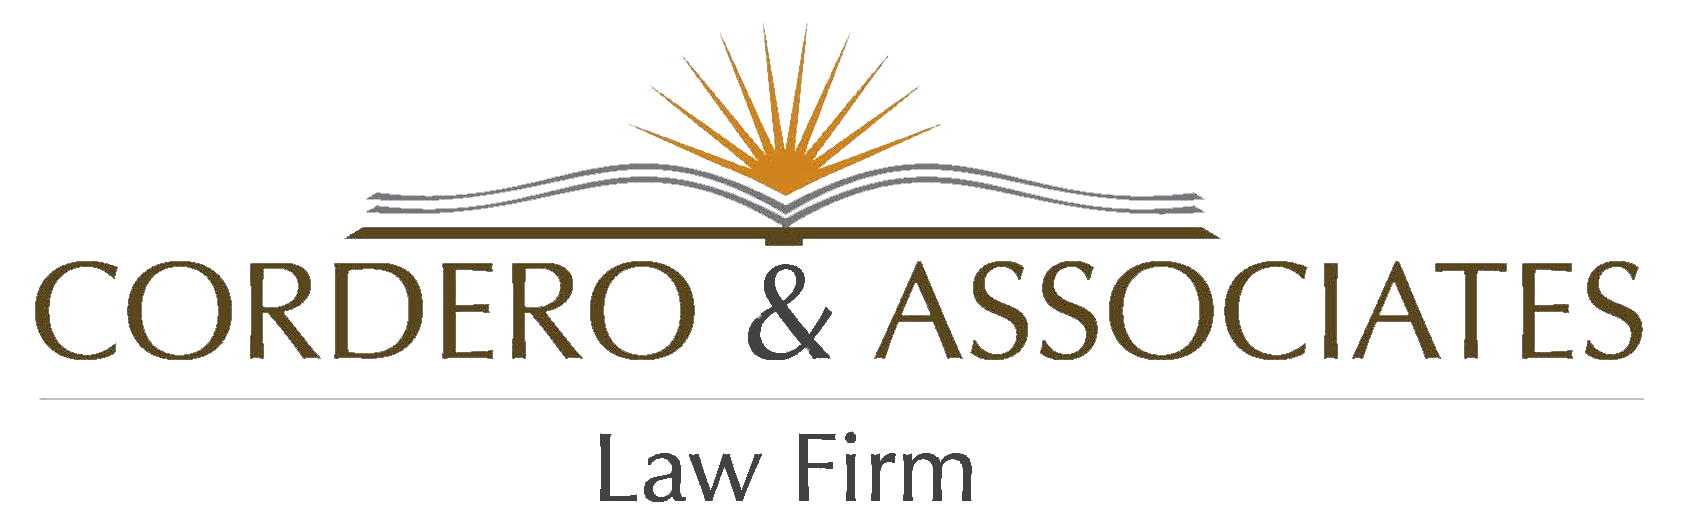 Cordero & Associates Law Firm